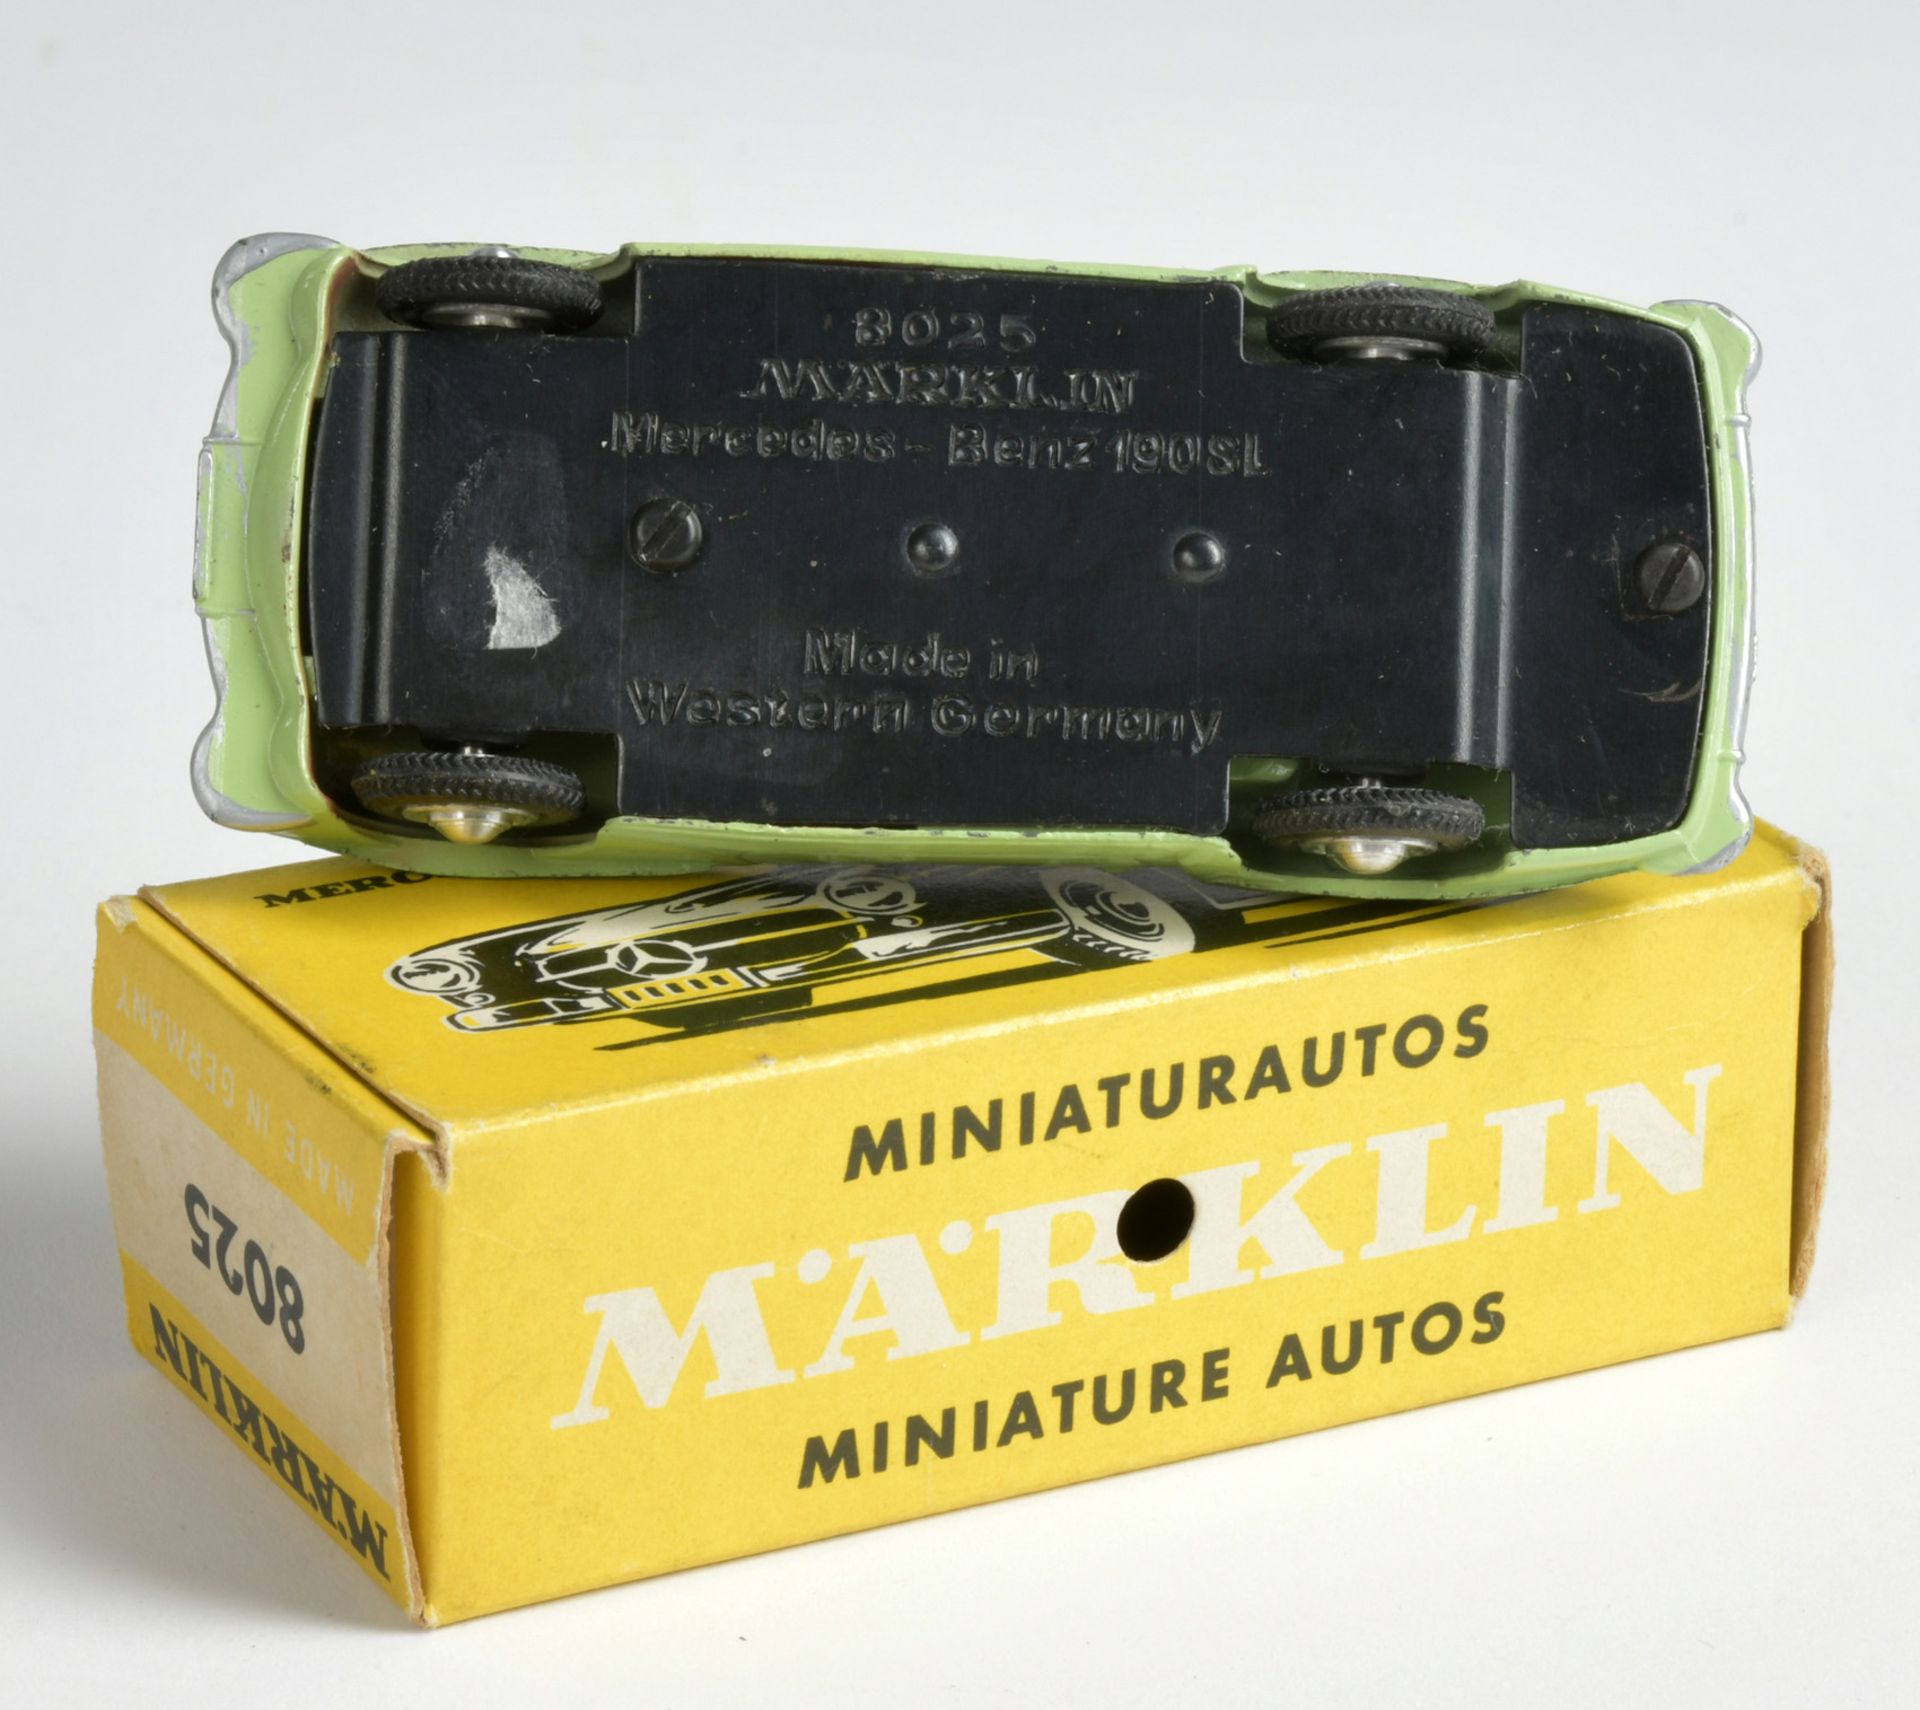 Märklin, Mercedes 190 SL 8025, W.-Germany, 1:43, diecast, box C 1, C 1 - Image 3 of 3